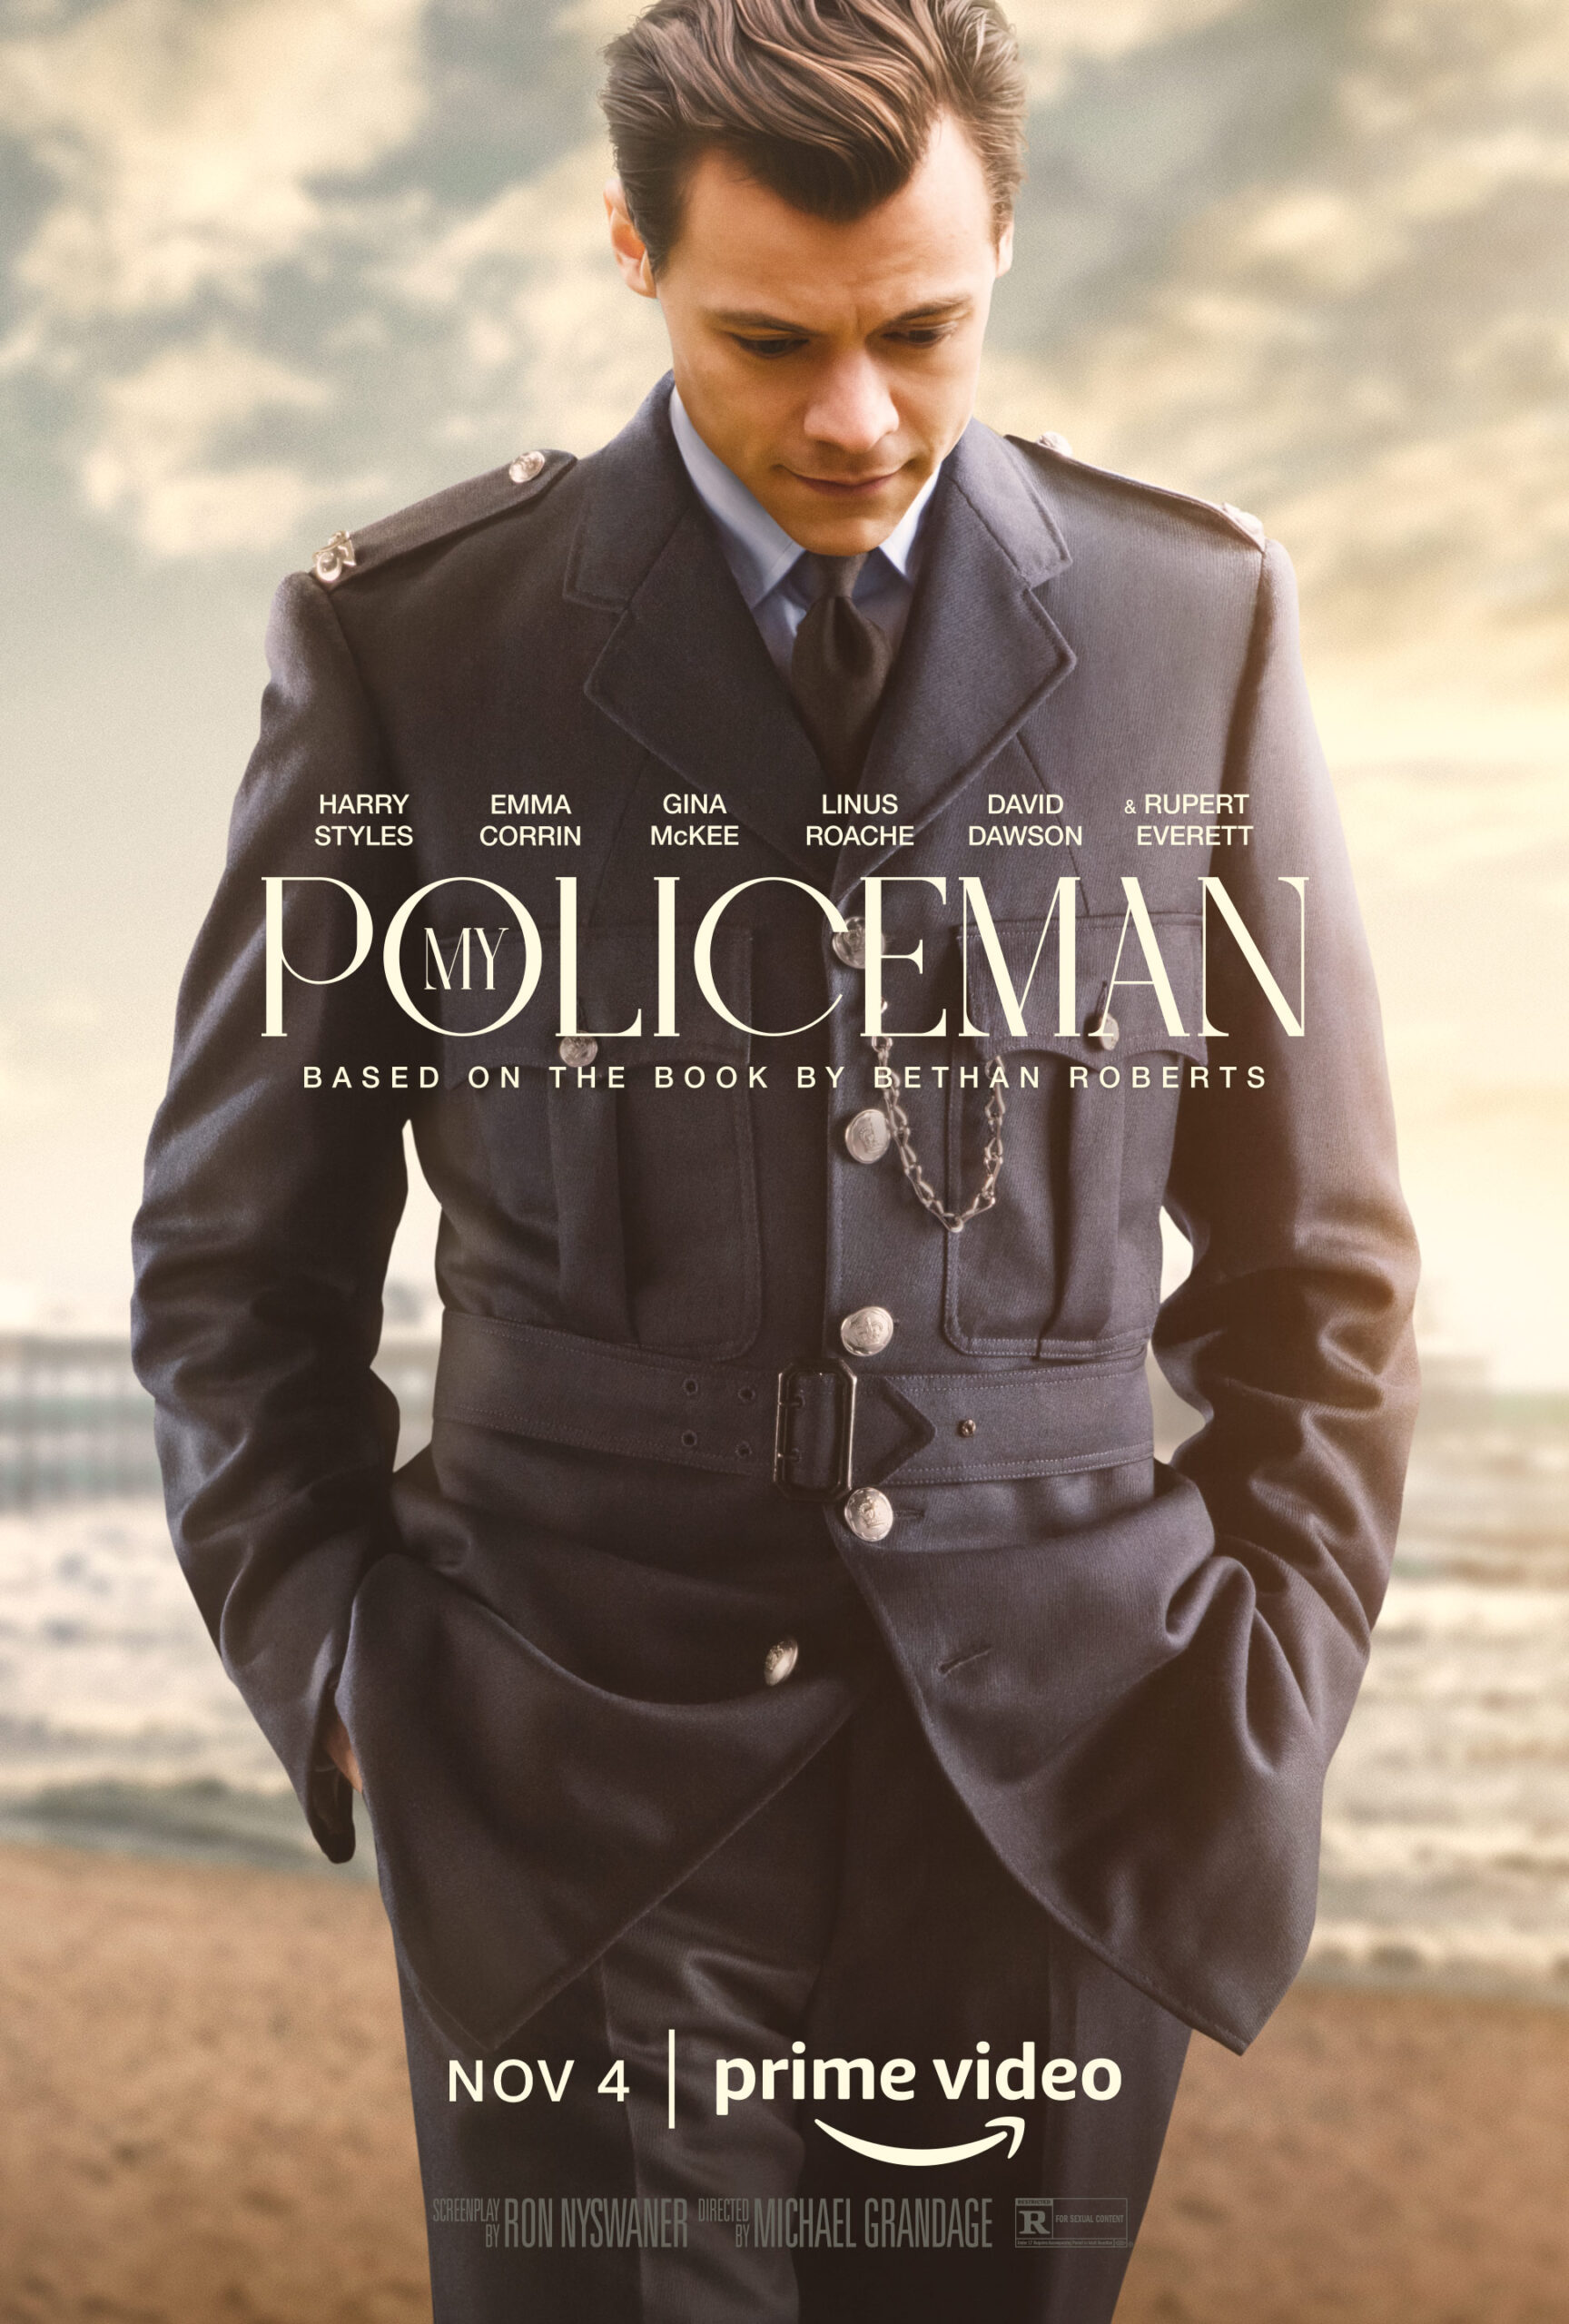 My Policeman locandina